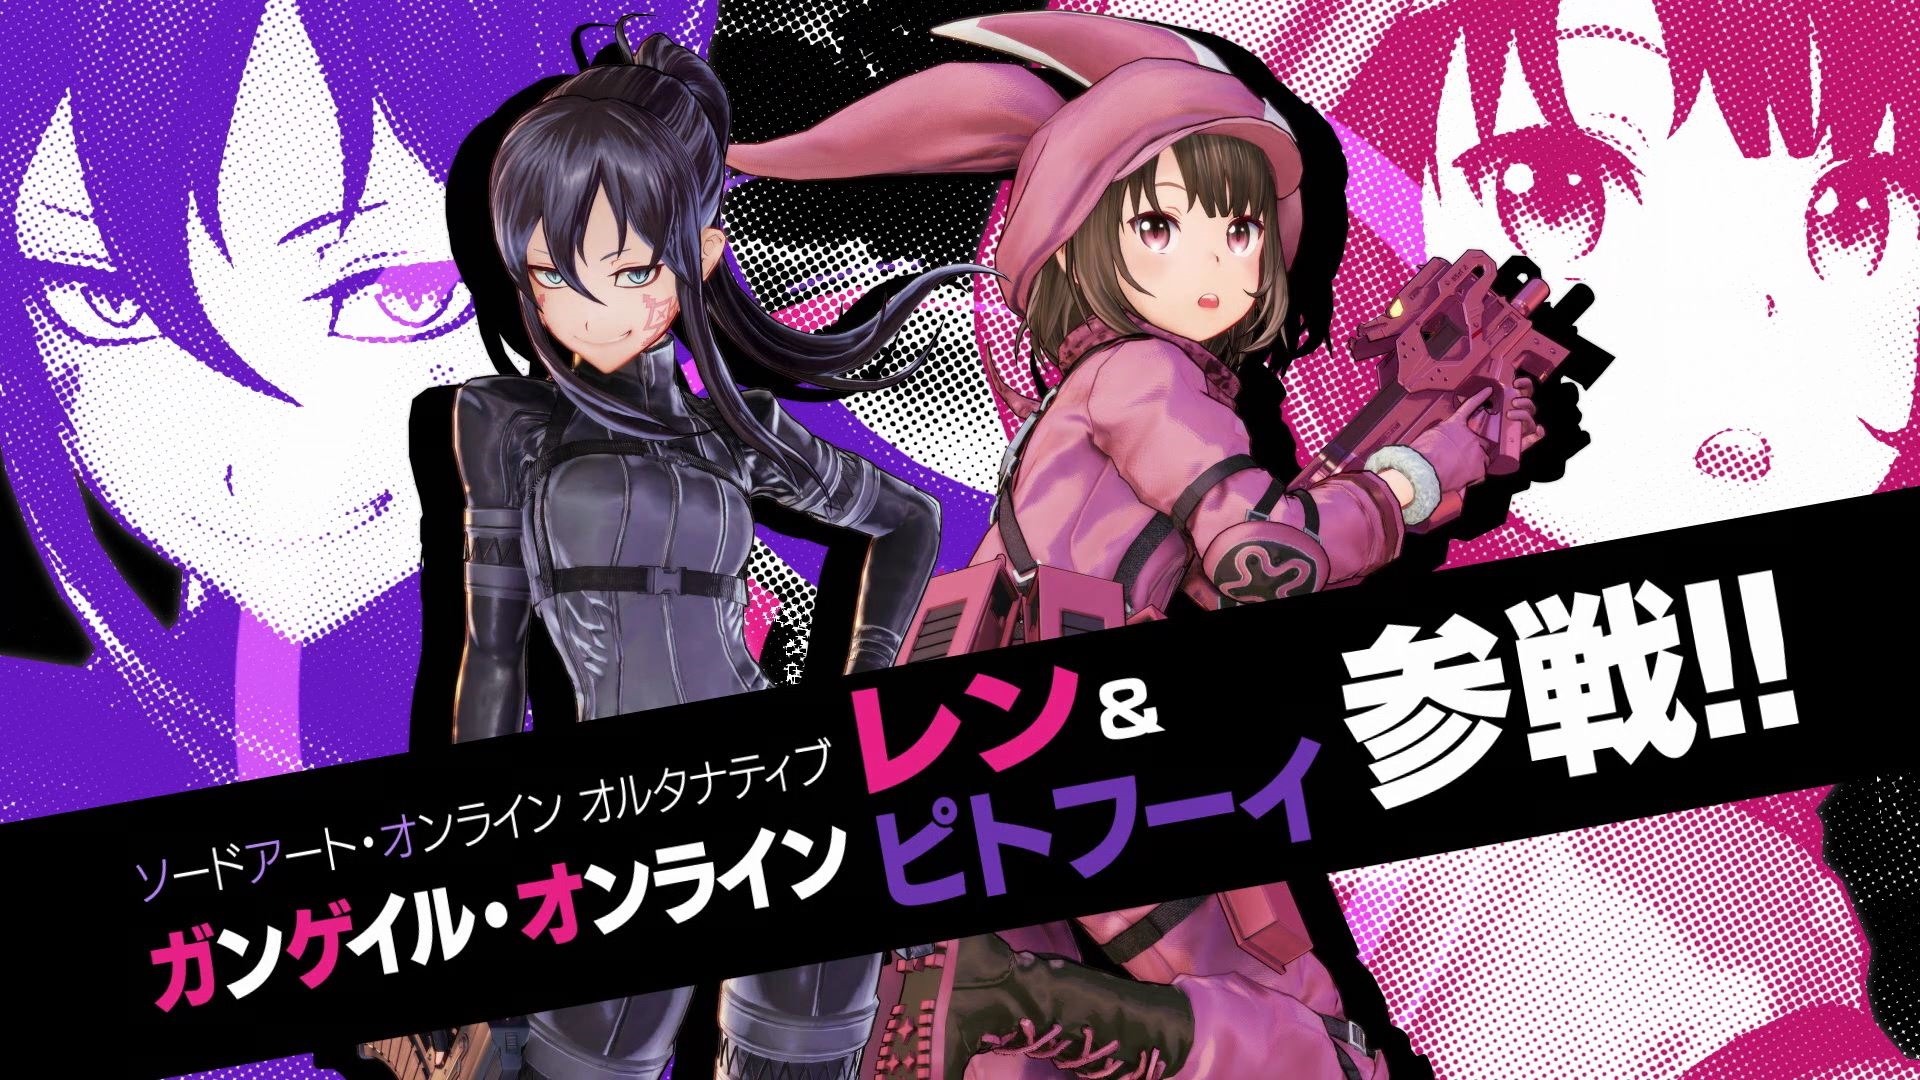 Sword Art Online Alternative: Gun Gale Online Season 2 Announced : r/anime